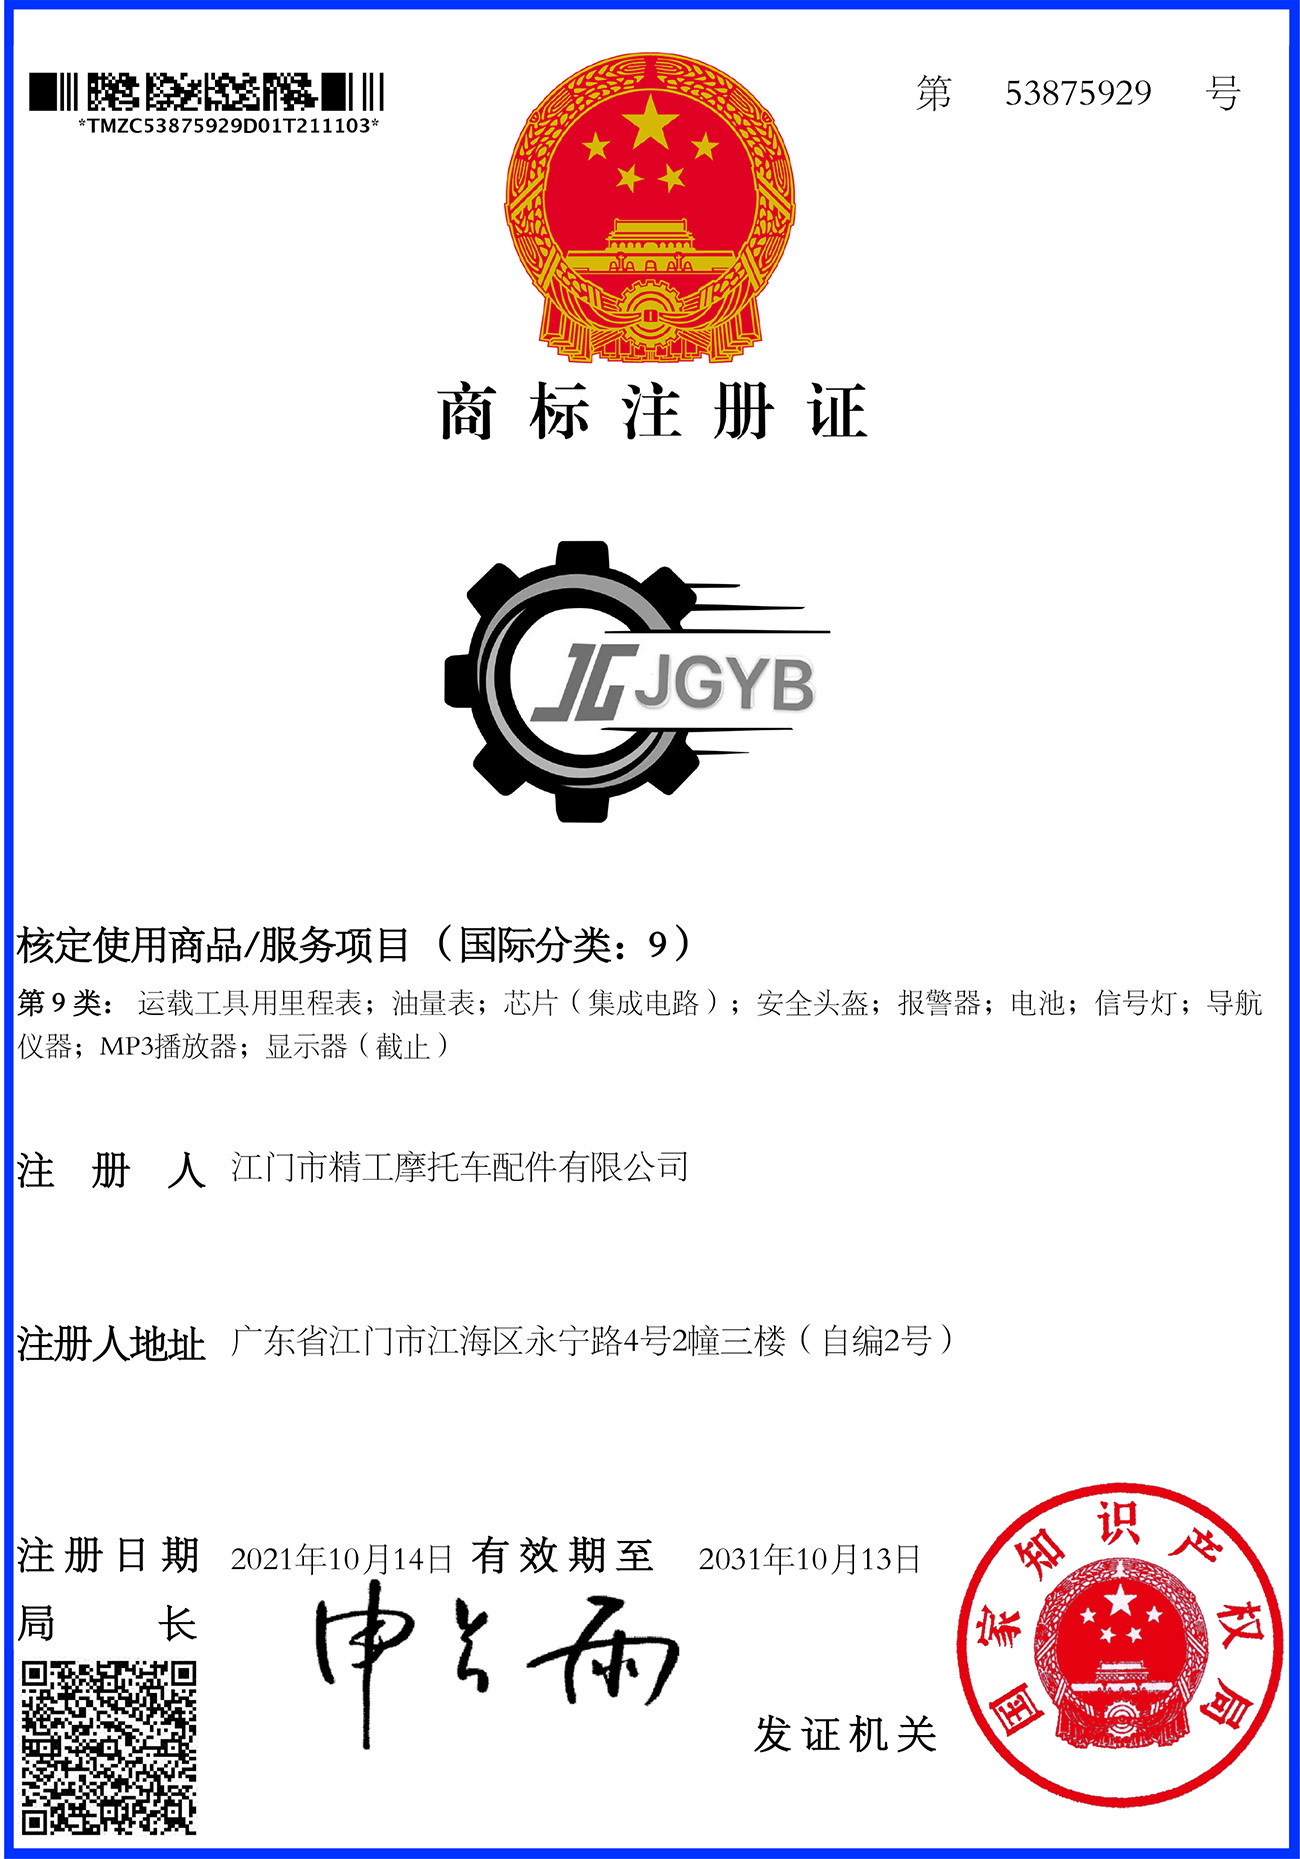 Trademark Registration Certificate -53875929-Seiko-JGJGYB-9 Class